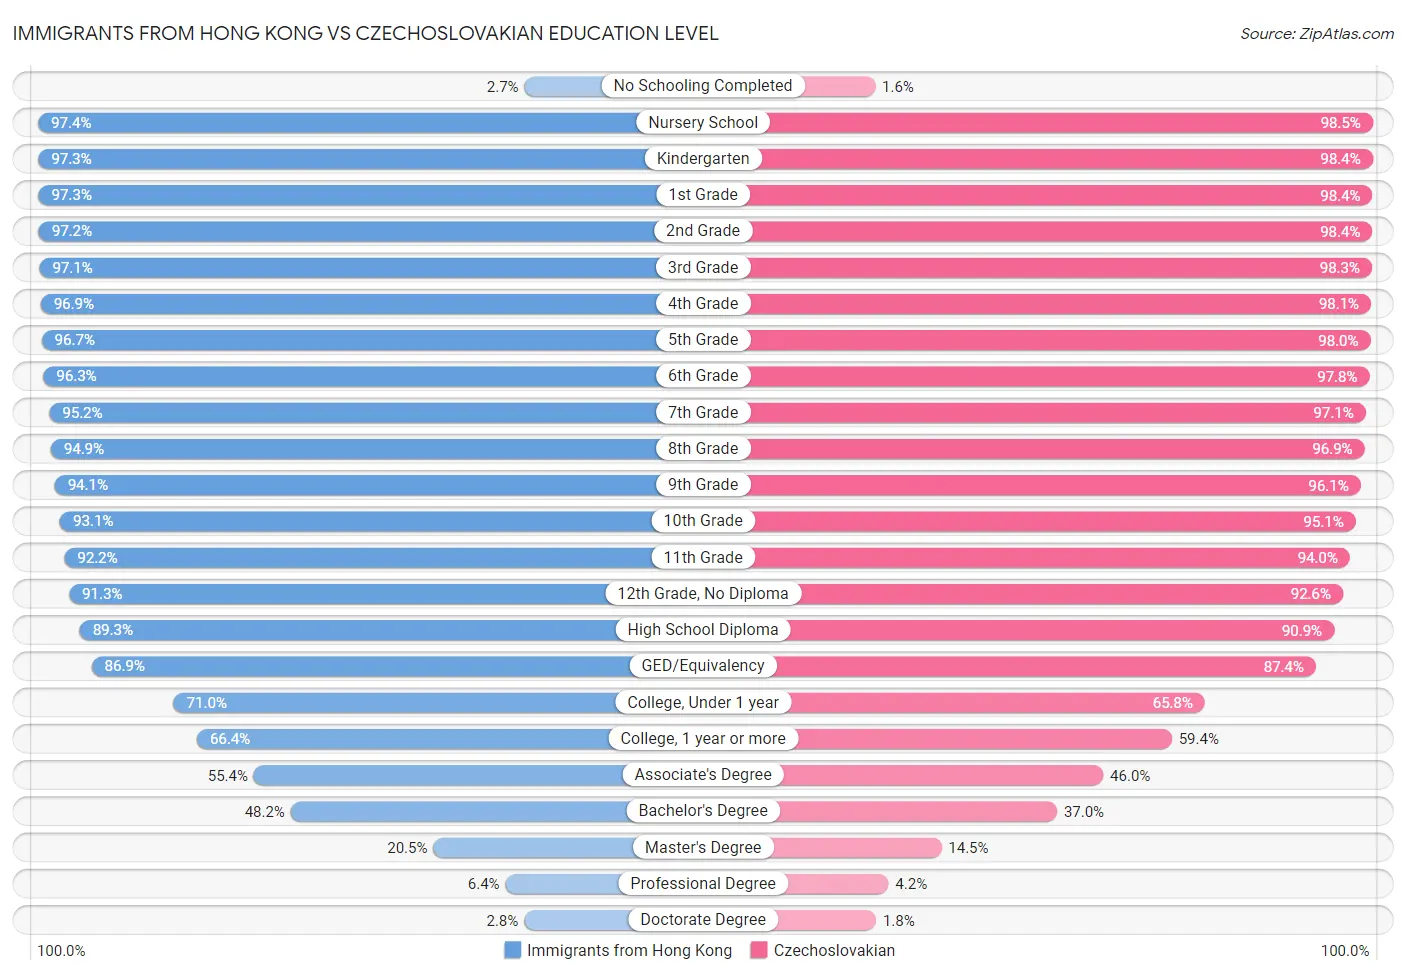 Immigrants from Hong Kong vs Czechoslovakian Education Level